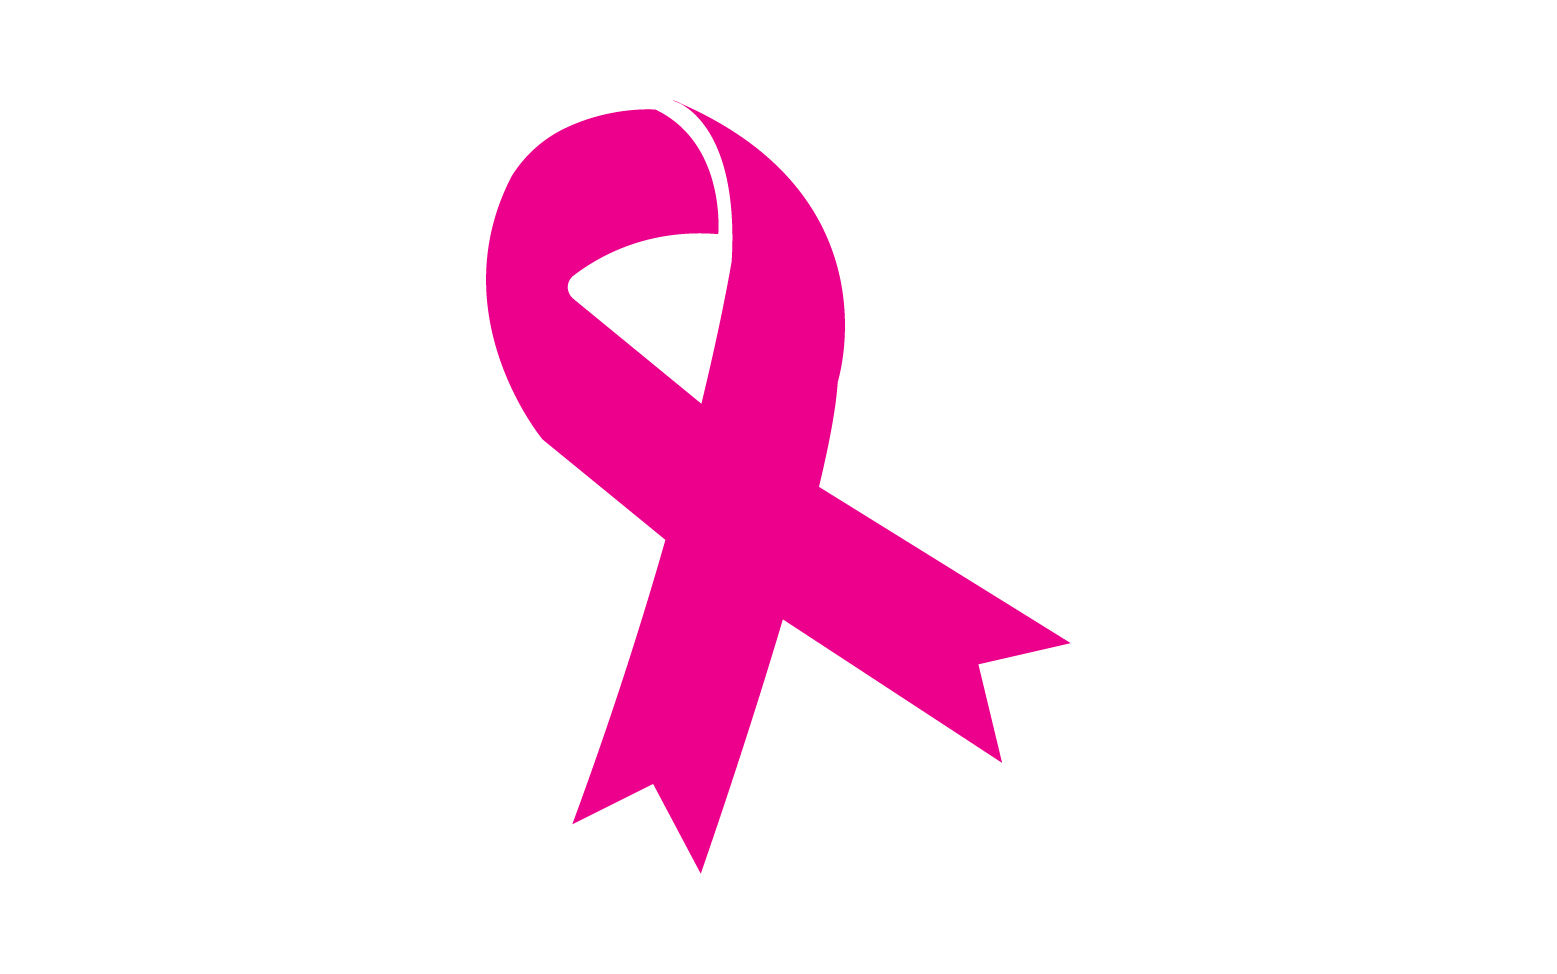 Ribbon pink icon logo element version v56